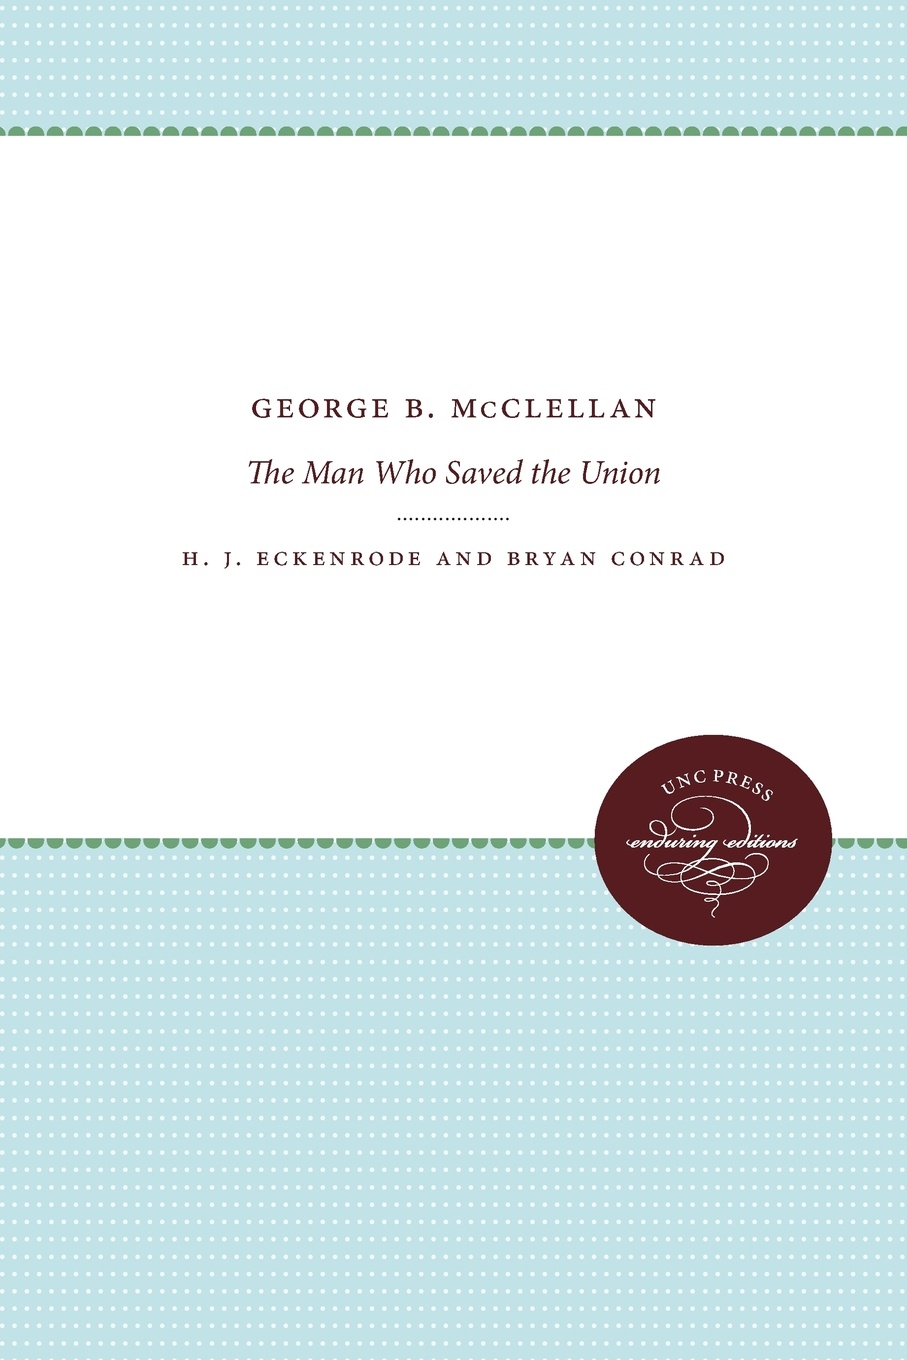 George B. McClellan. The Man Who Saved the Union